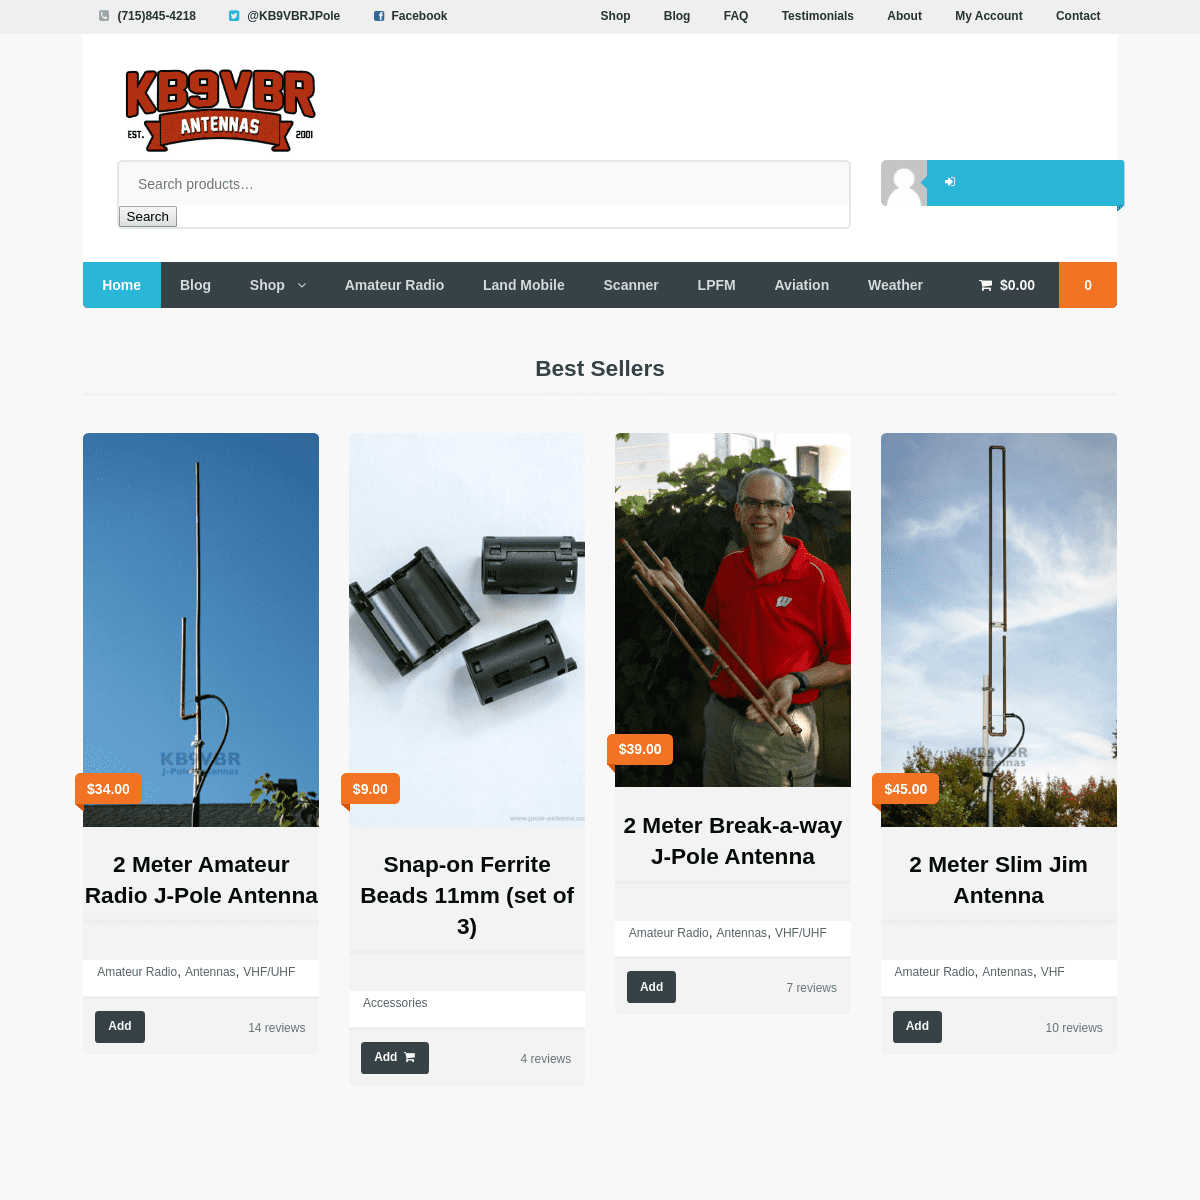 A complete backup of jpole-antenna.com